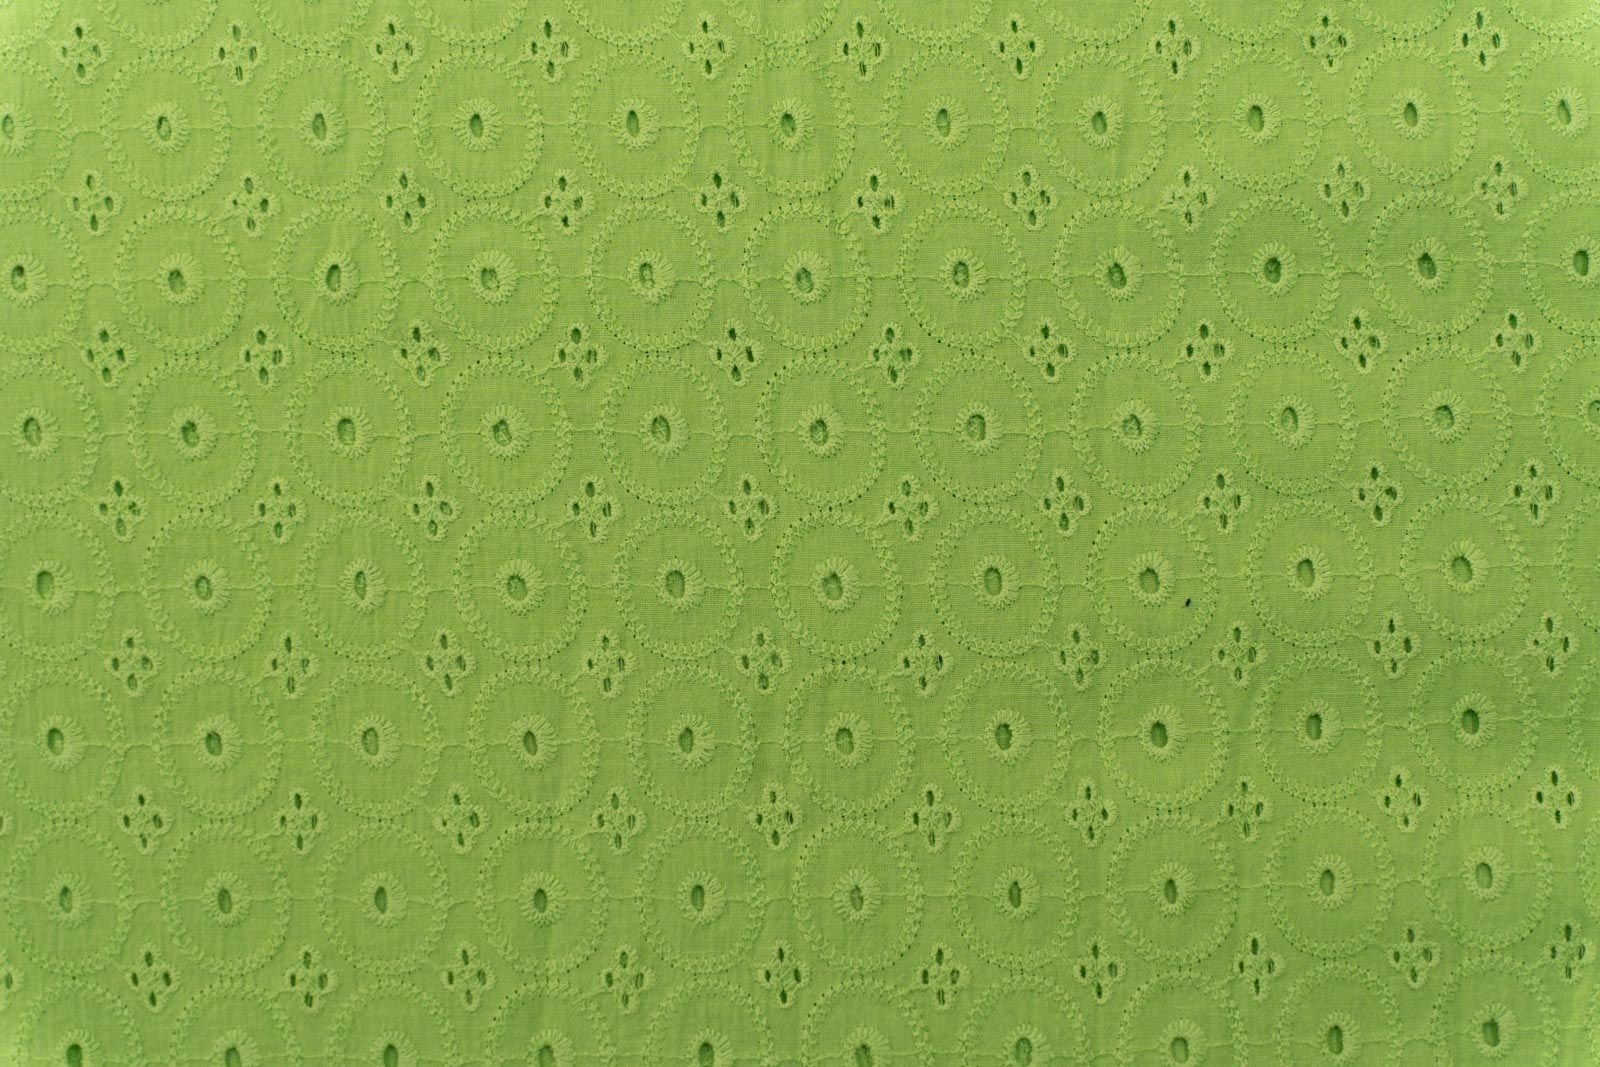 Macaw Green Chikankari Embroidered Cotton Fabric (width